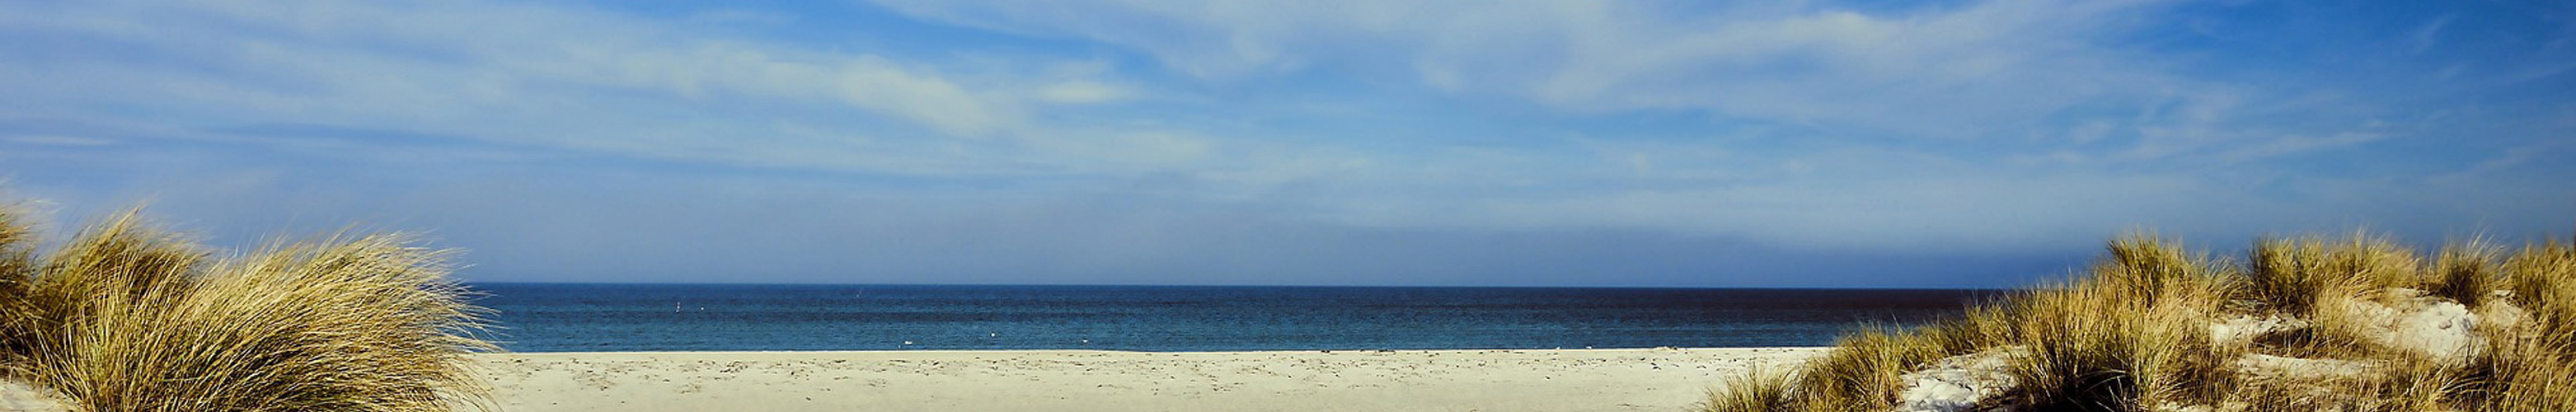 Sandstrand an der Ostsee bei Damp